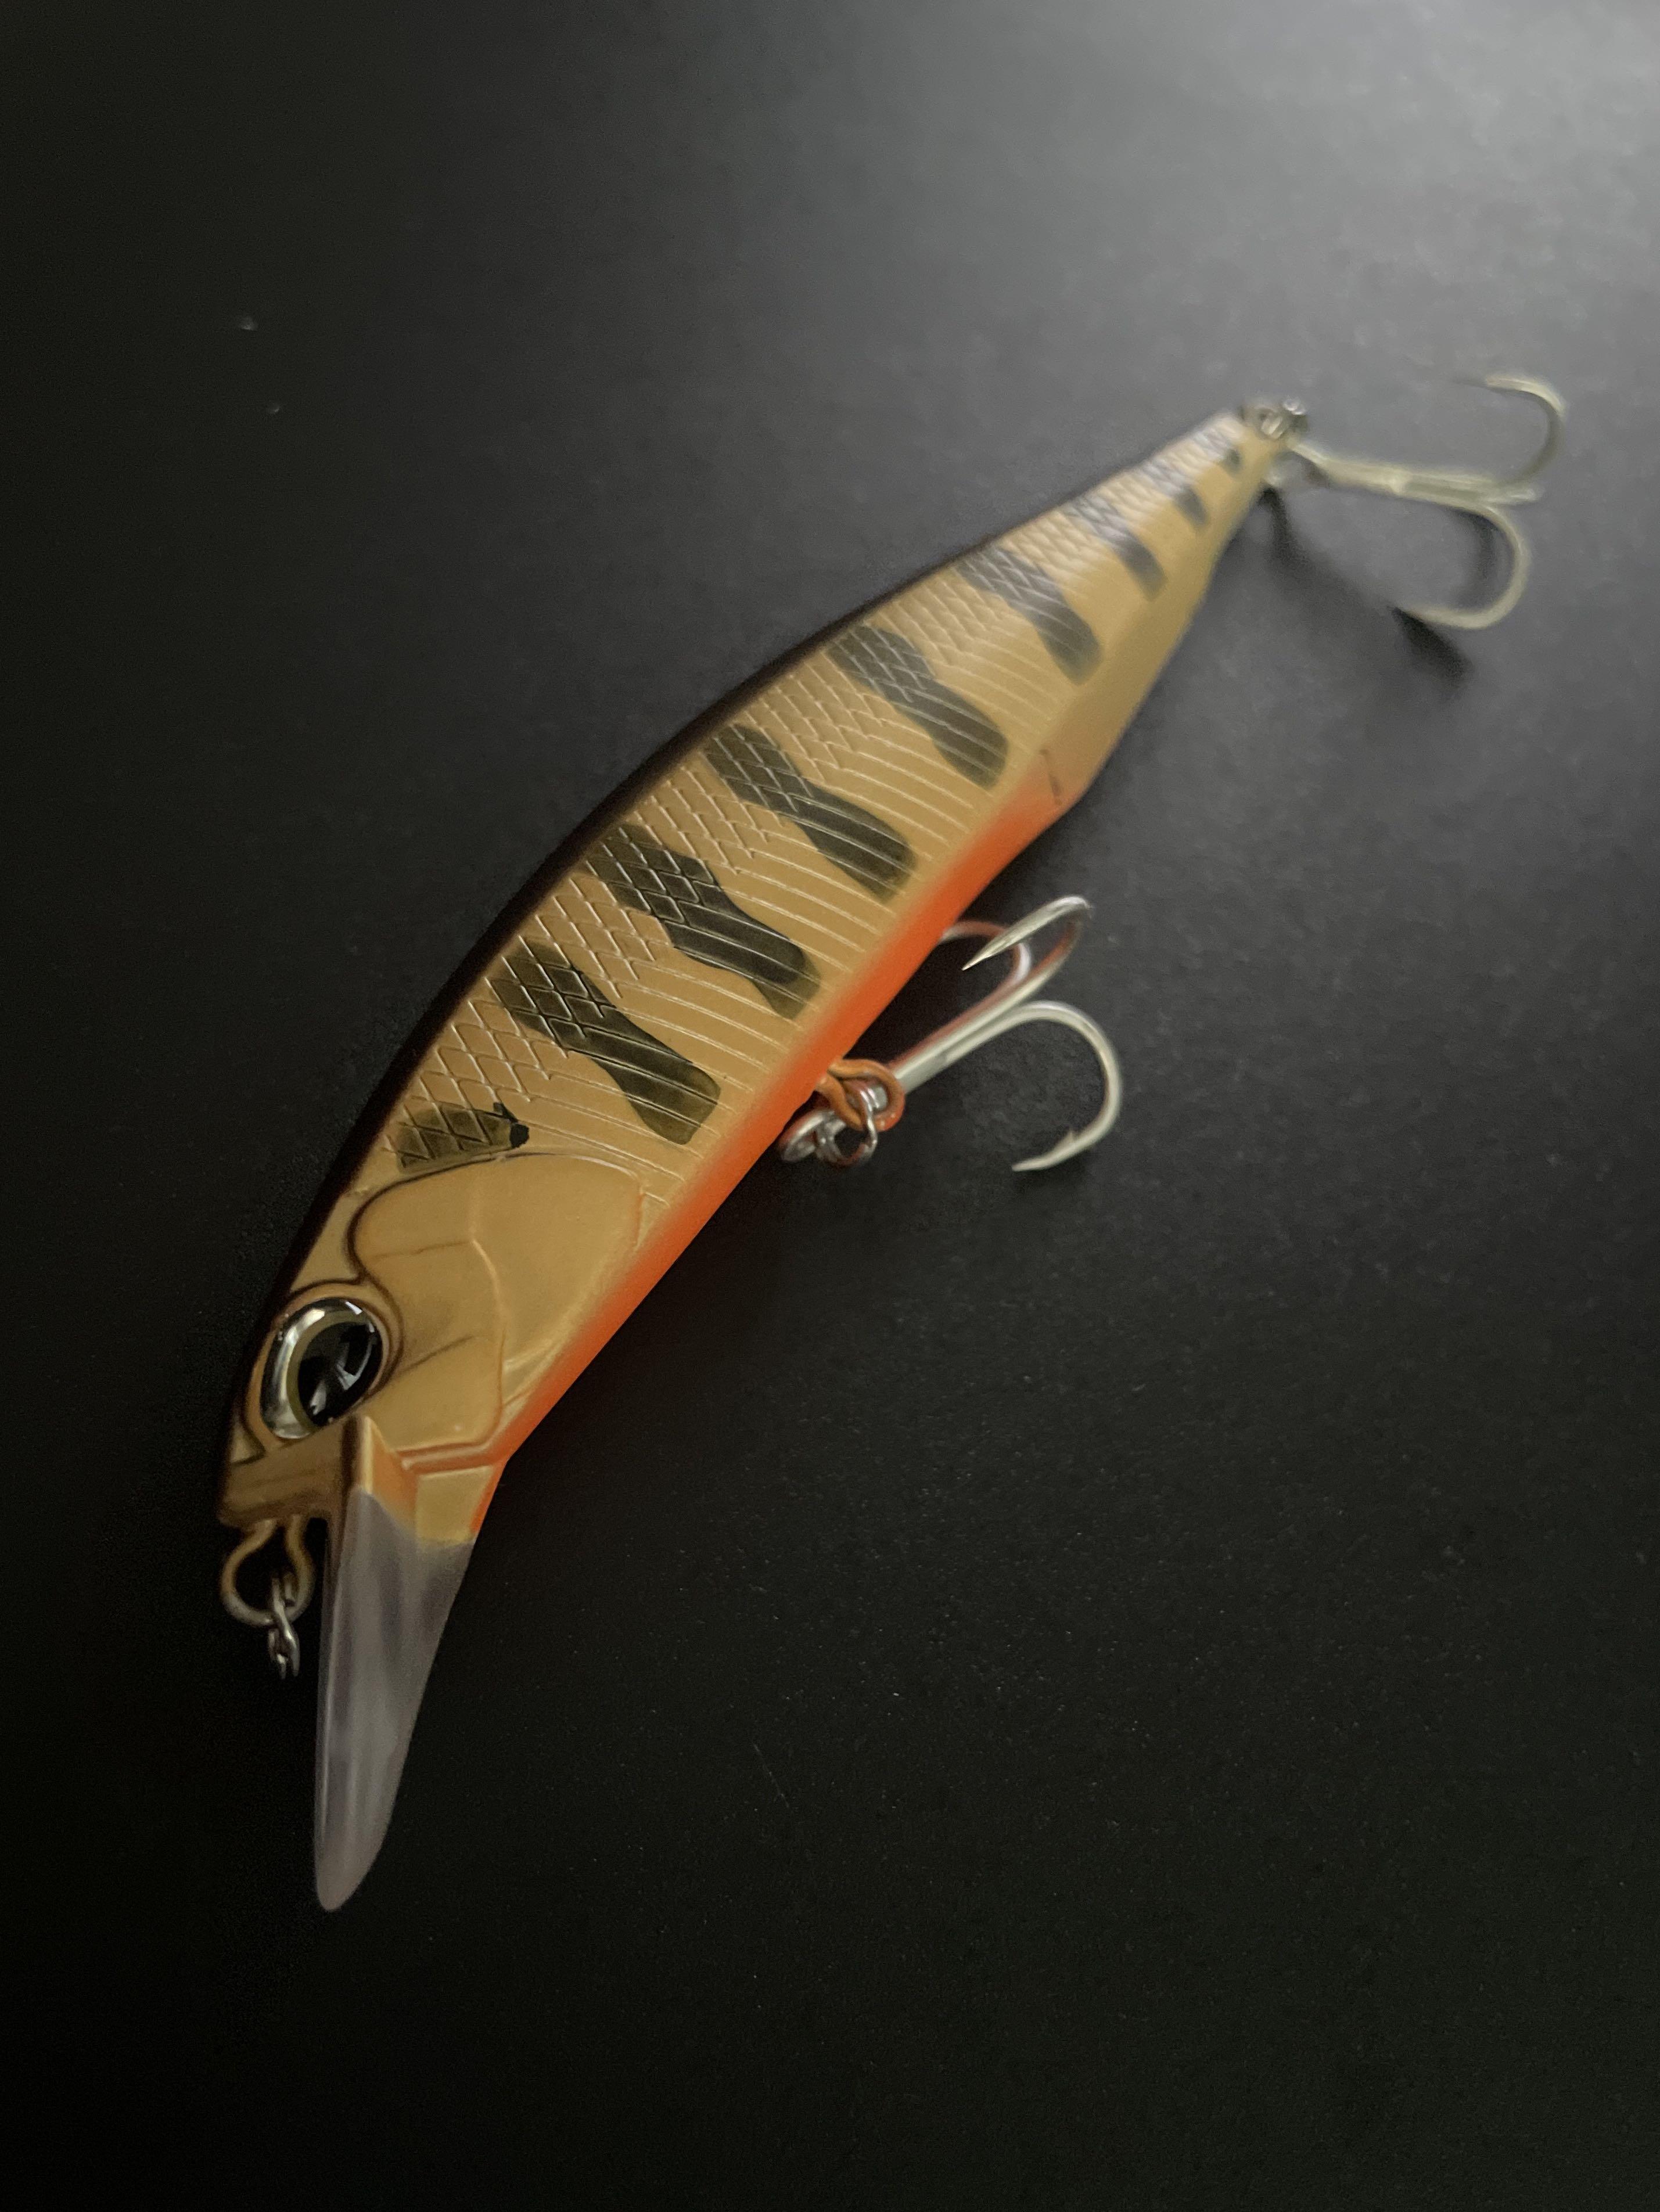 Bearking Jerkbait 100 Fishing Lure (daiwa shimano bone reel rod)